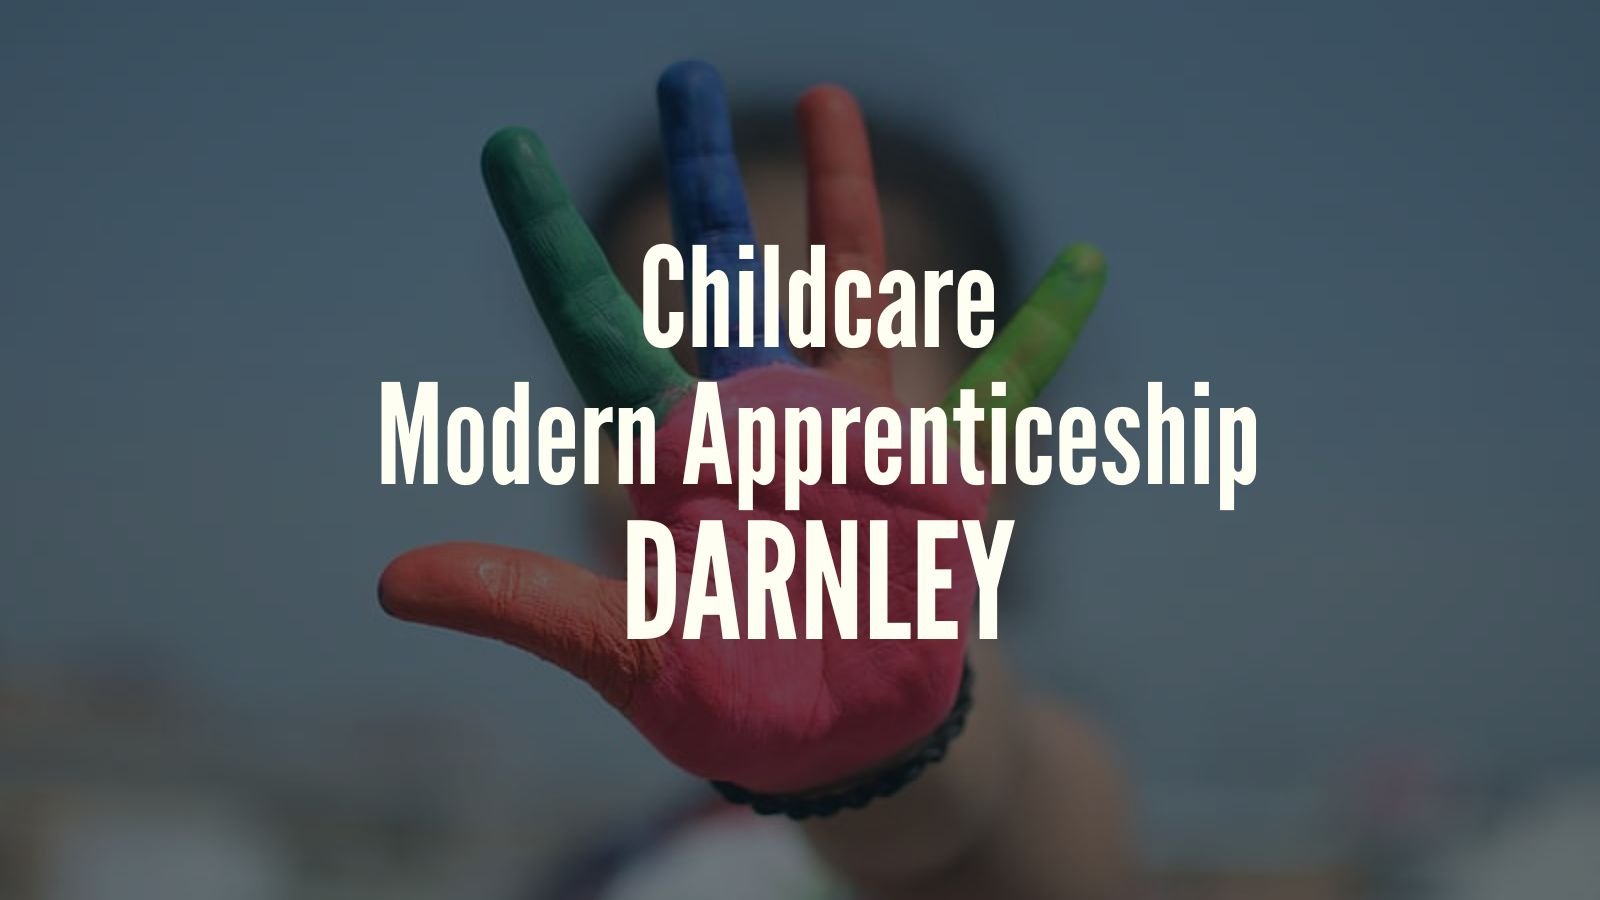 Childcare Modern Apprenticeship Vacancy Darnley